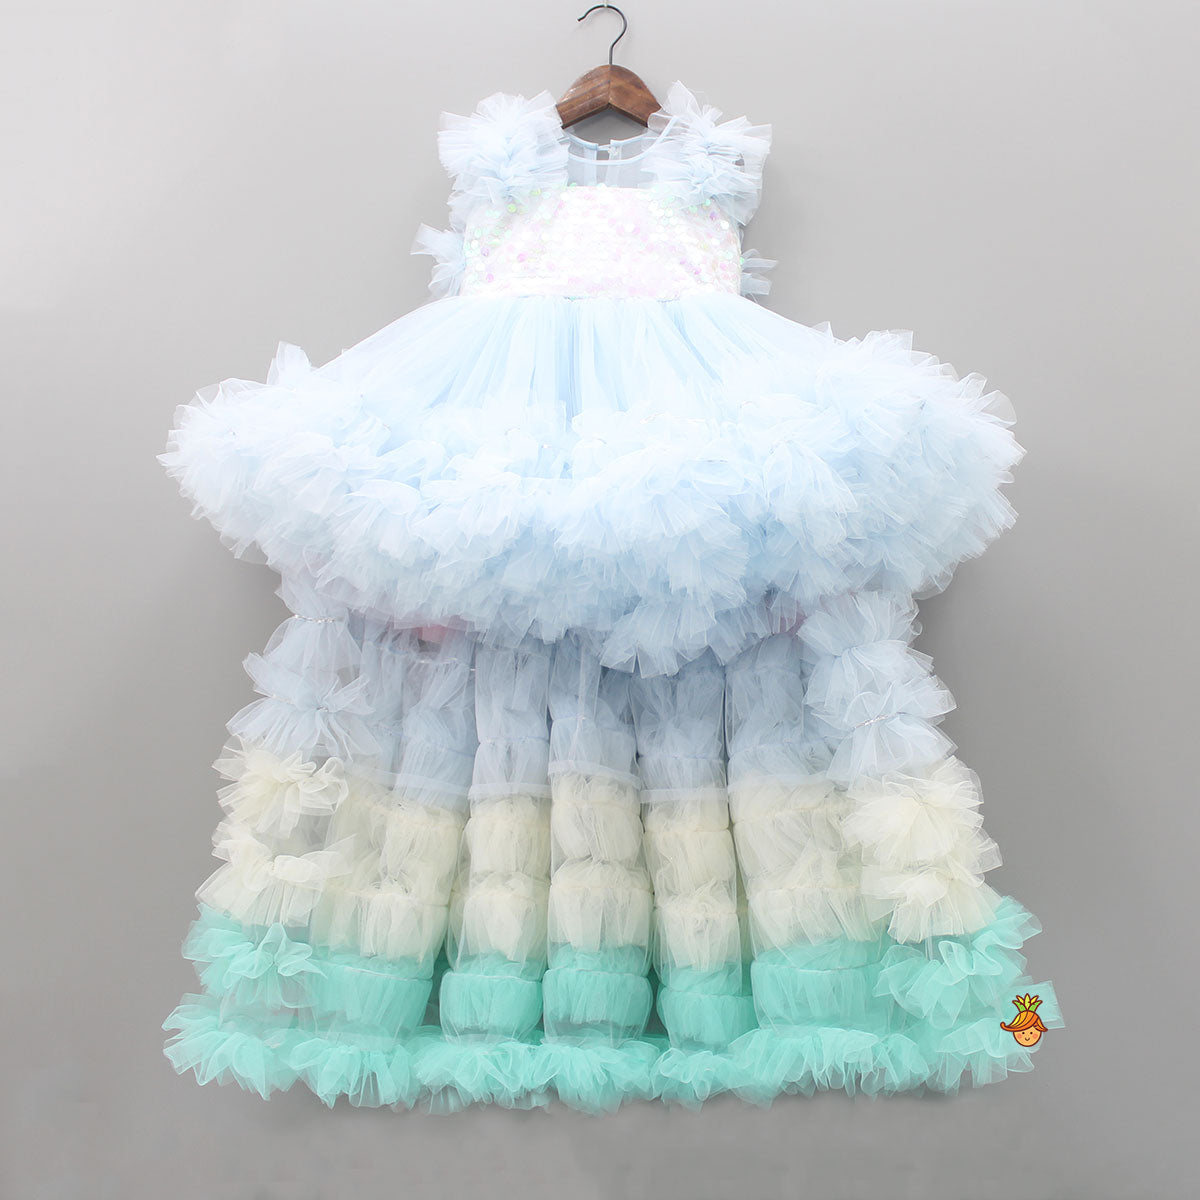 Pre Order: Shaded Ruffled Drape Style Party Dress